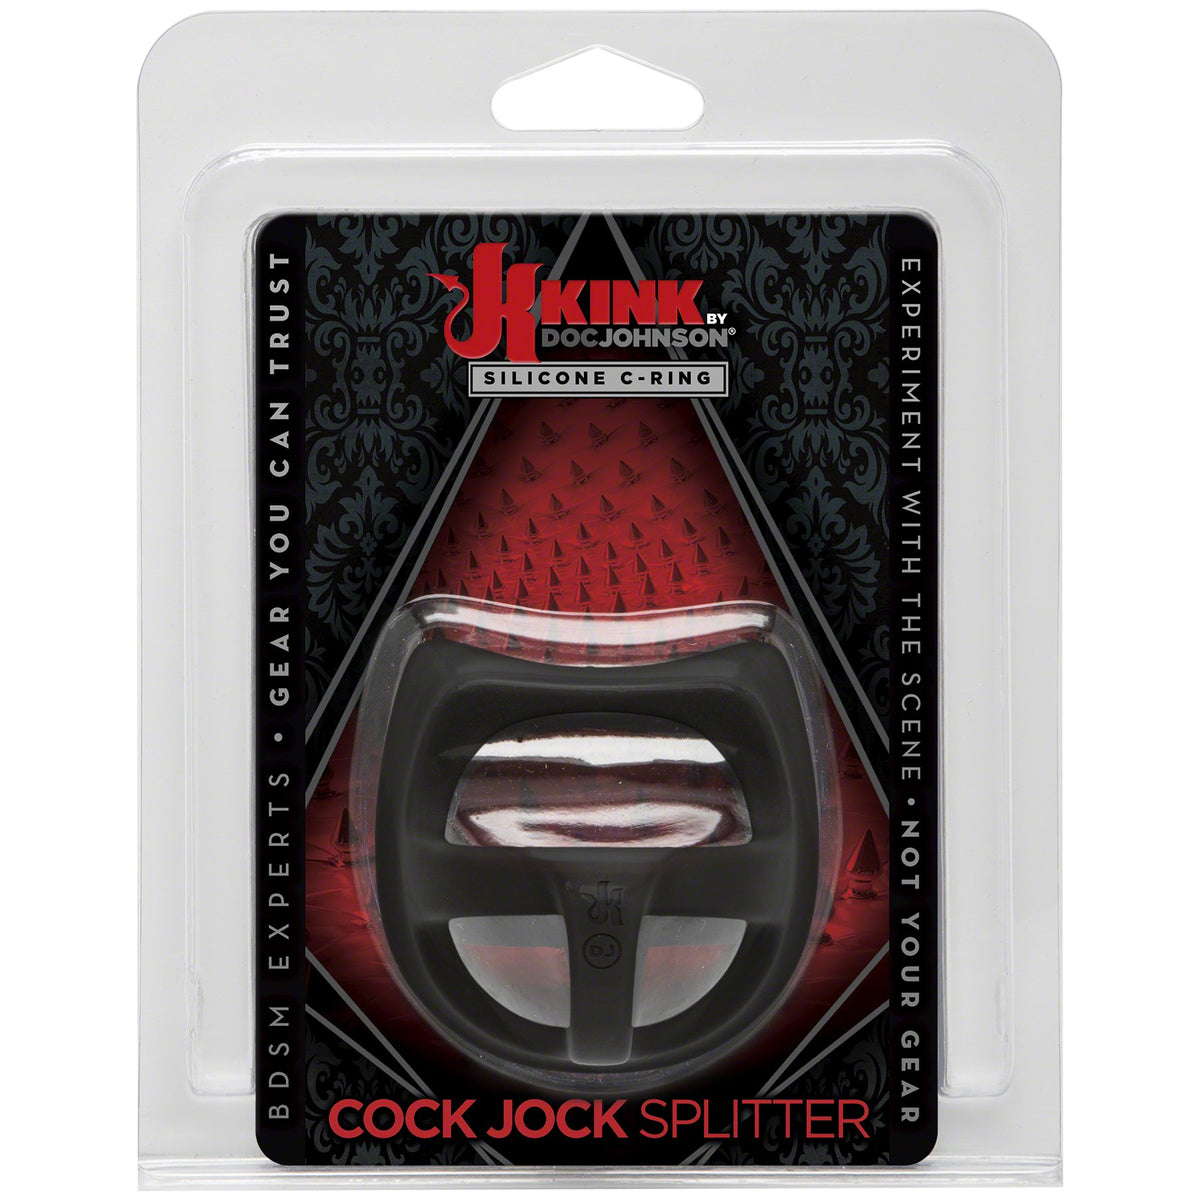 Doc Johnson Kink - Cock Jock Splitter